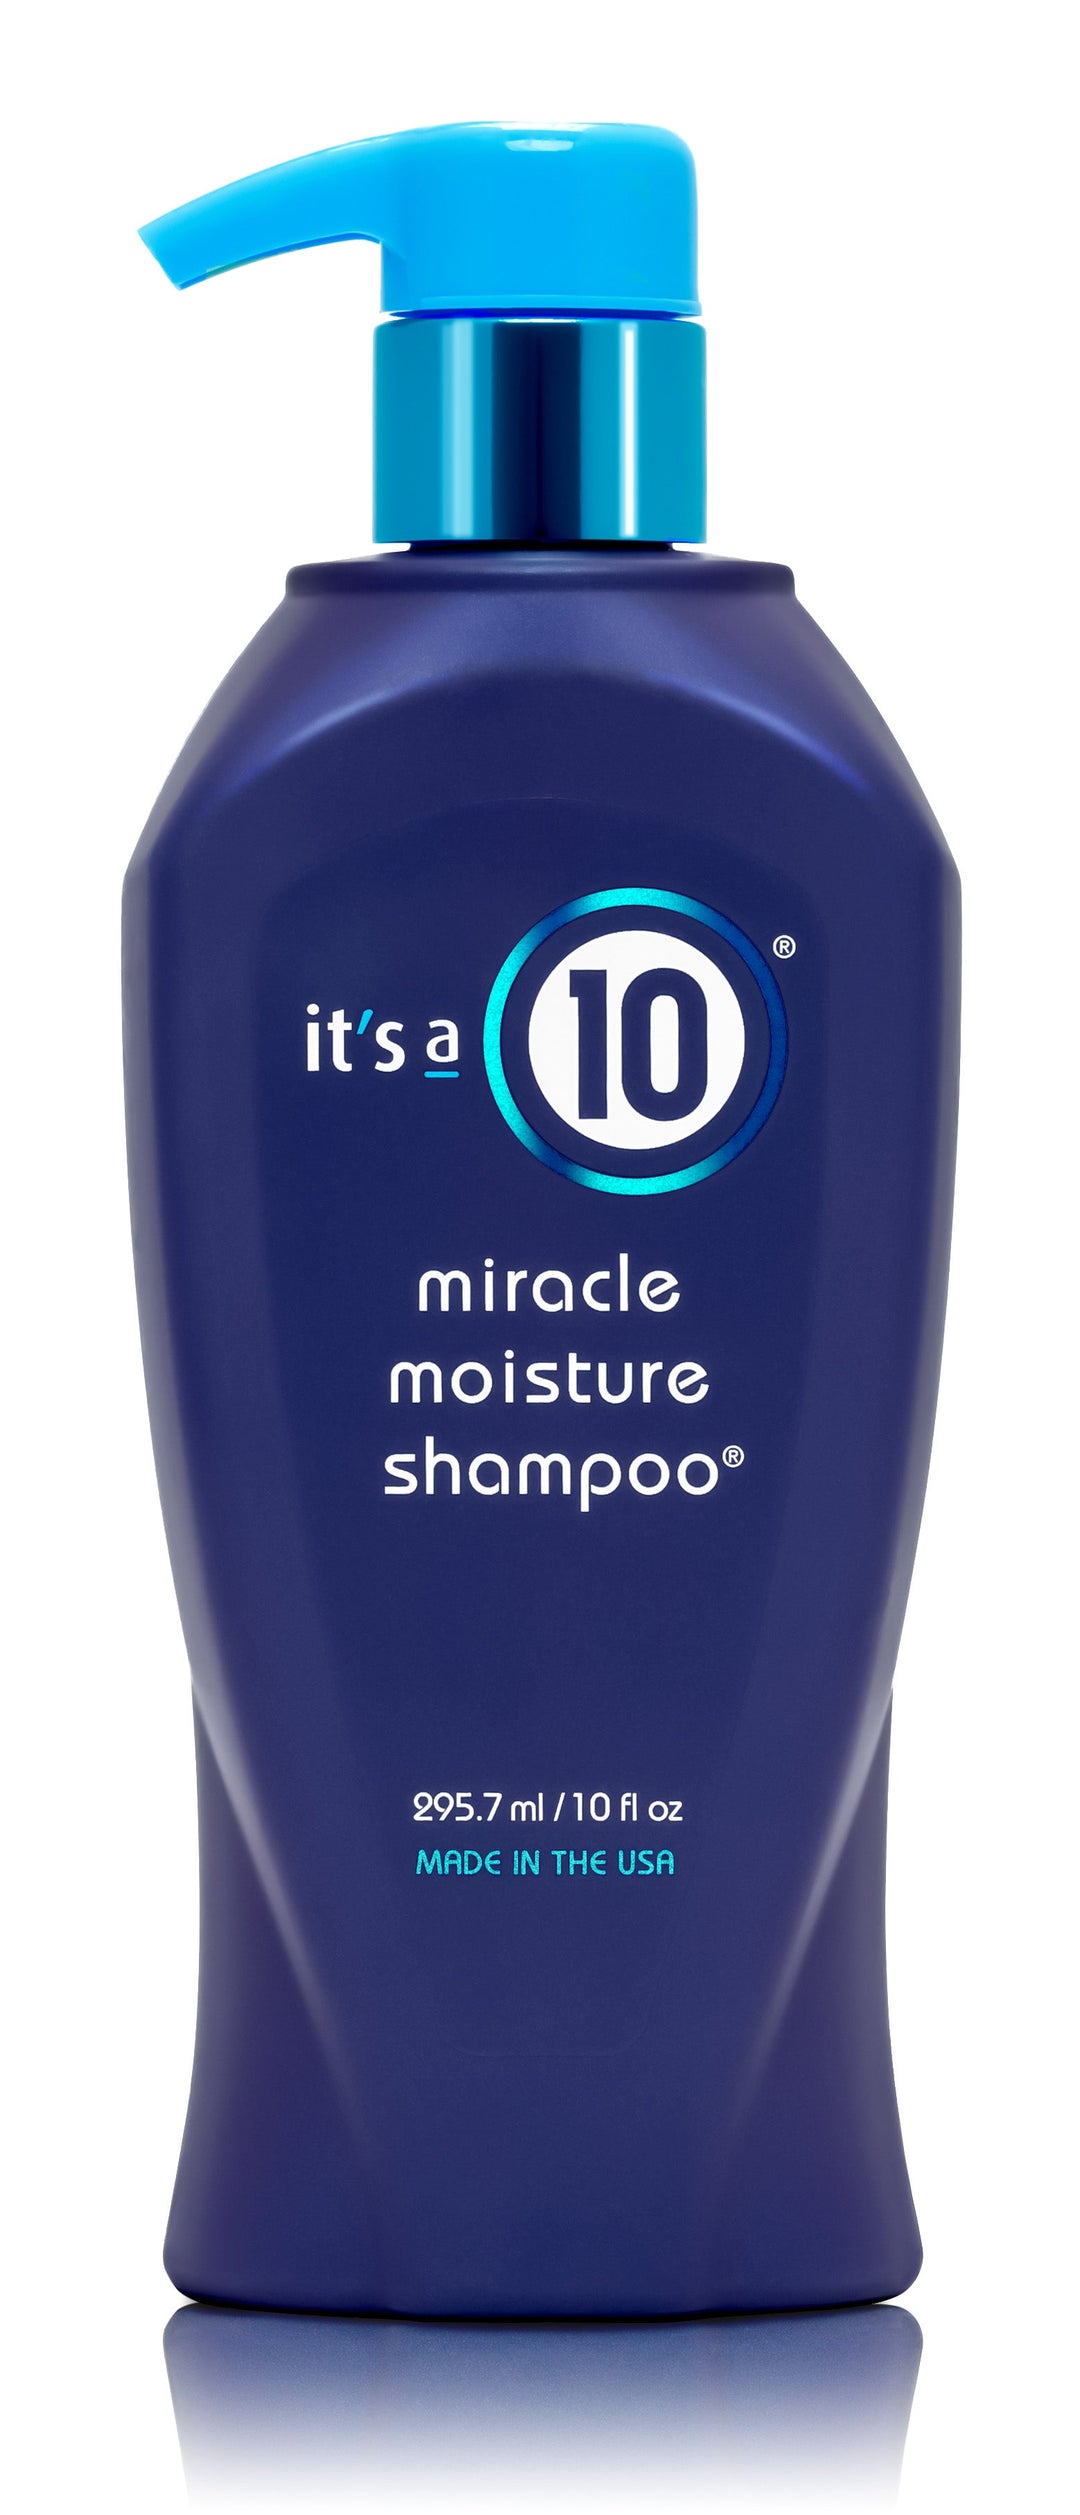 It’s a 10 - Miracle Moisture Shampoo